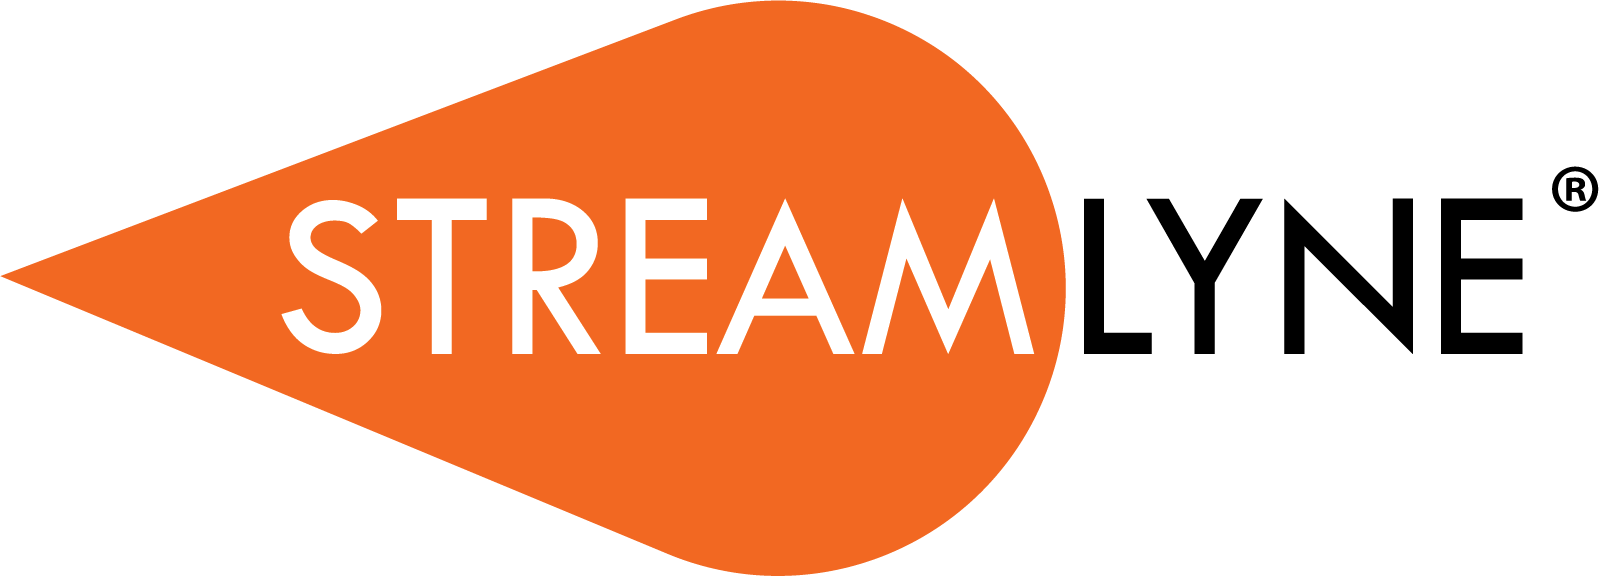 Streamlyne Logo